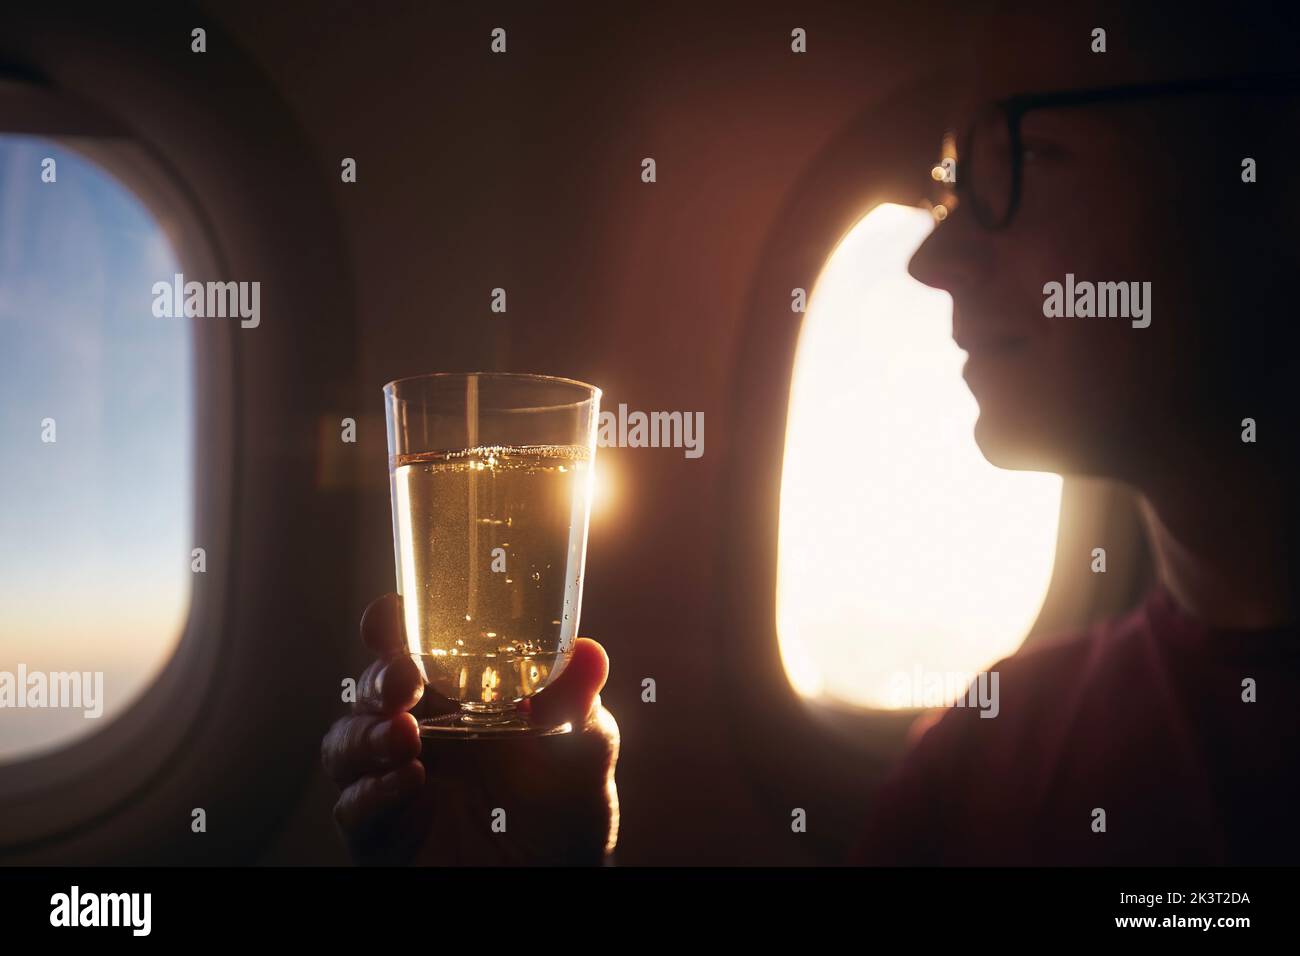 Man enjoying drink during flight. Passenger holding glass of sparkling wine against airplane window at sunset. Stock Photo